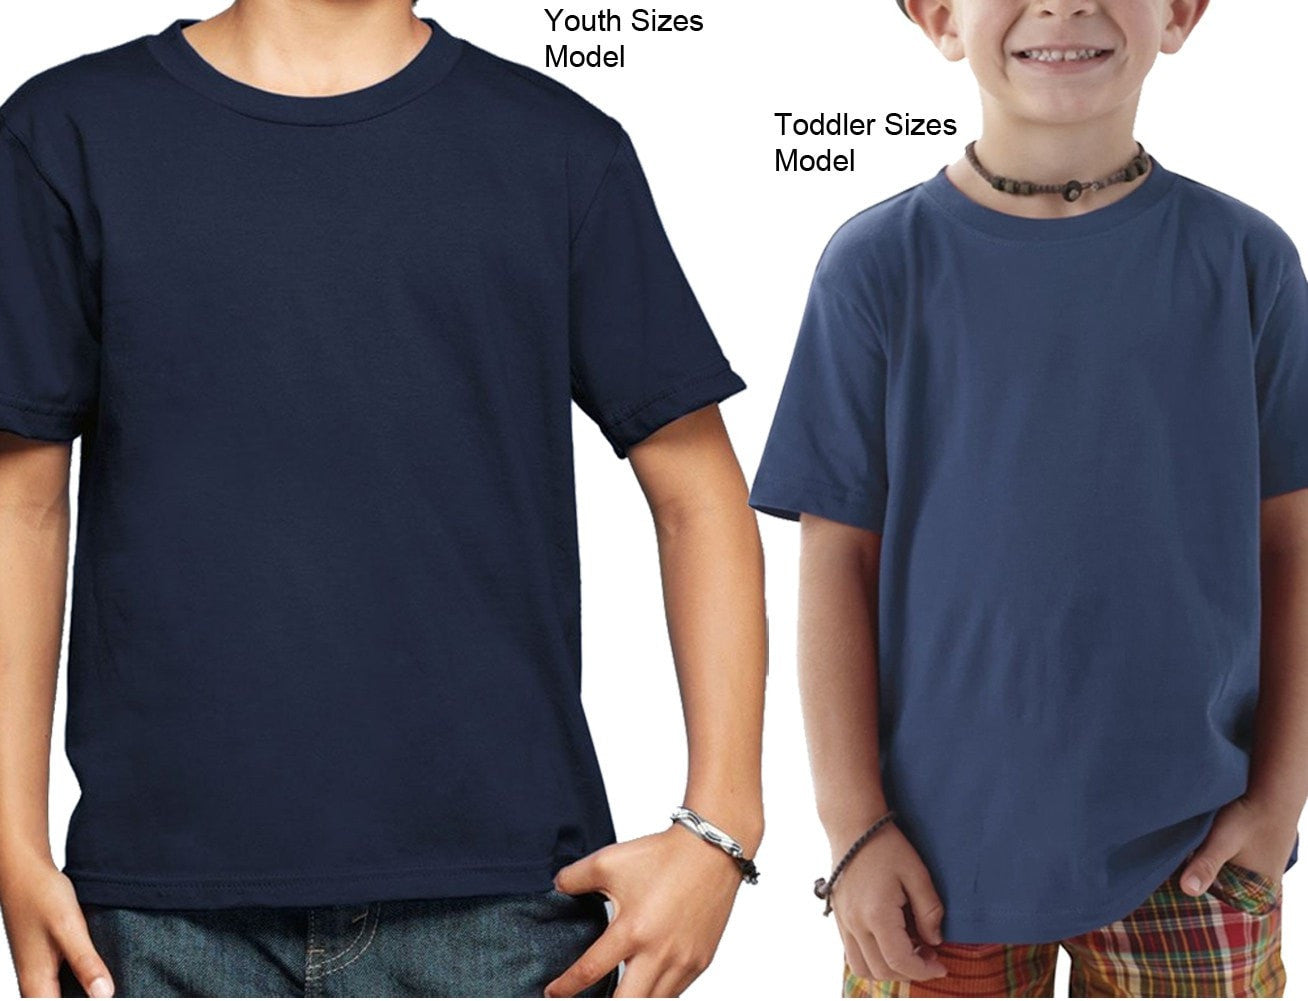 Boy's Georgia T-Shirt